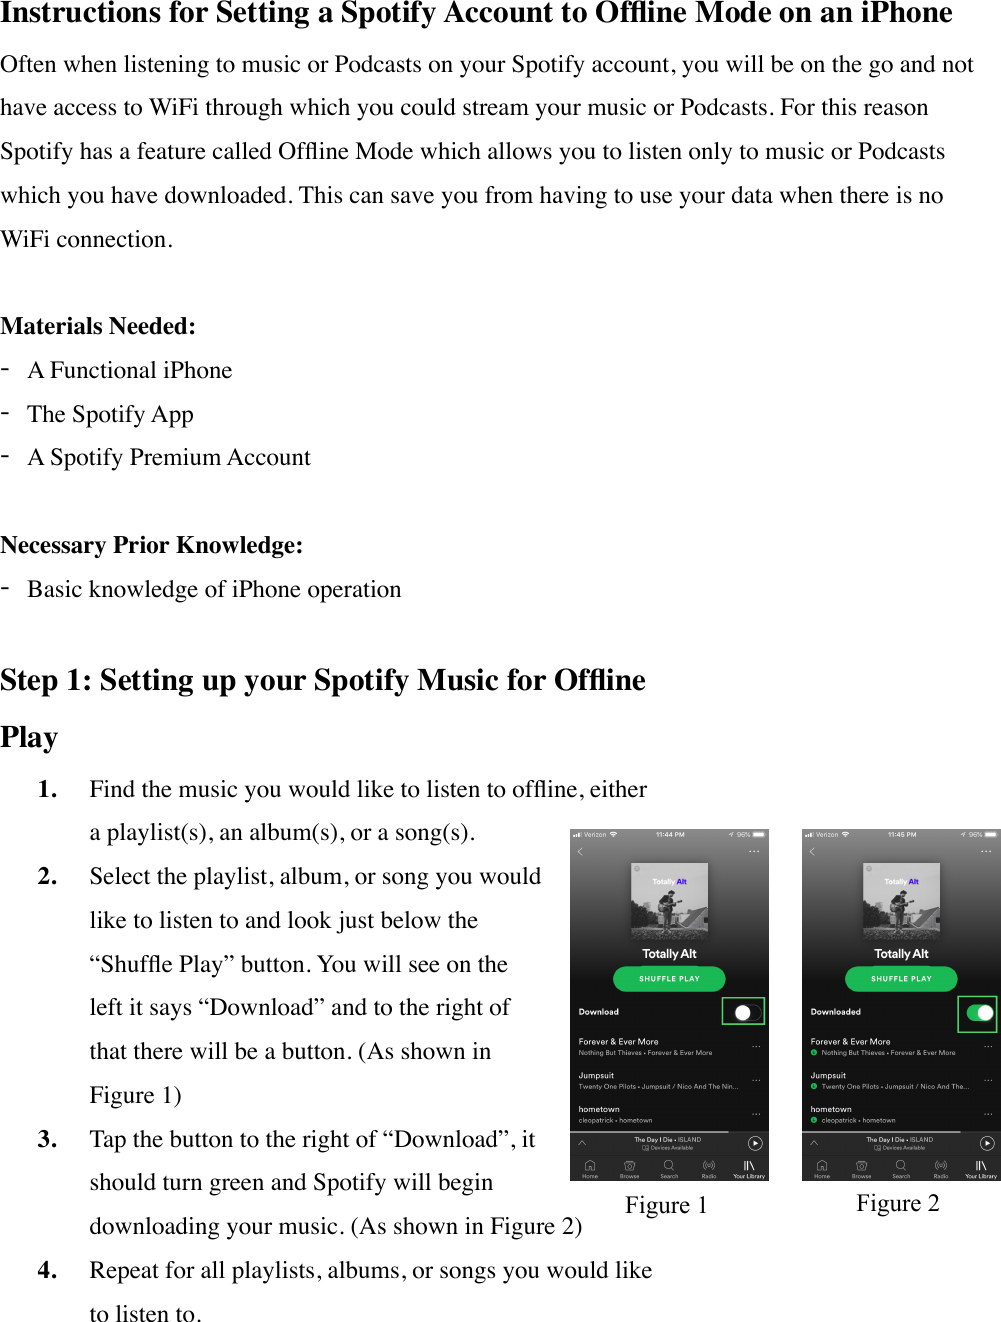 download spotify app for mac os x vs. 10.13.6